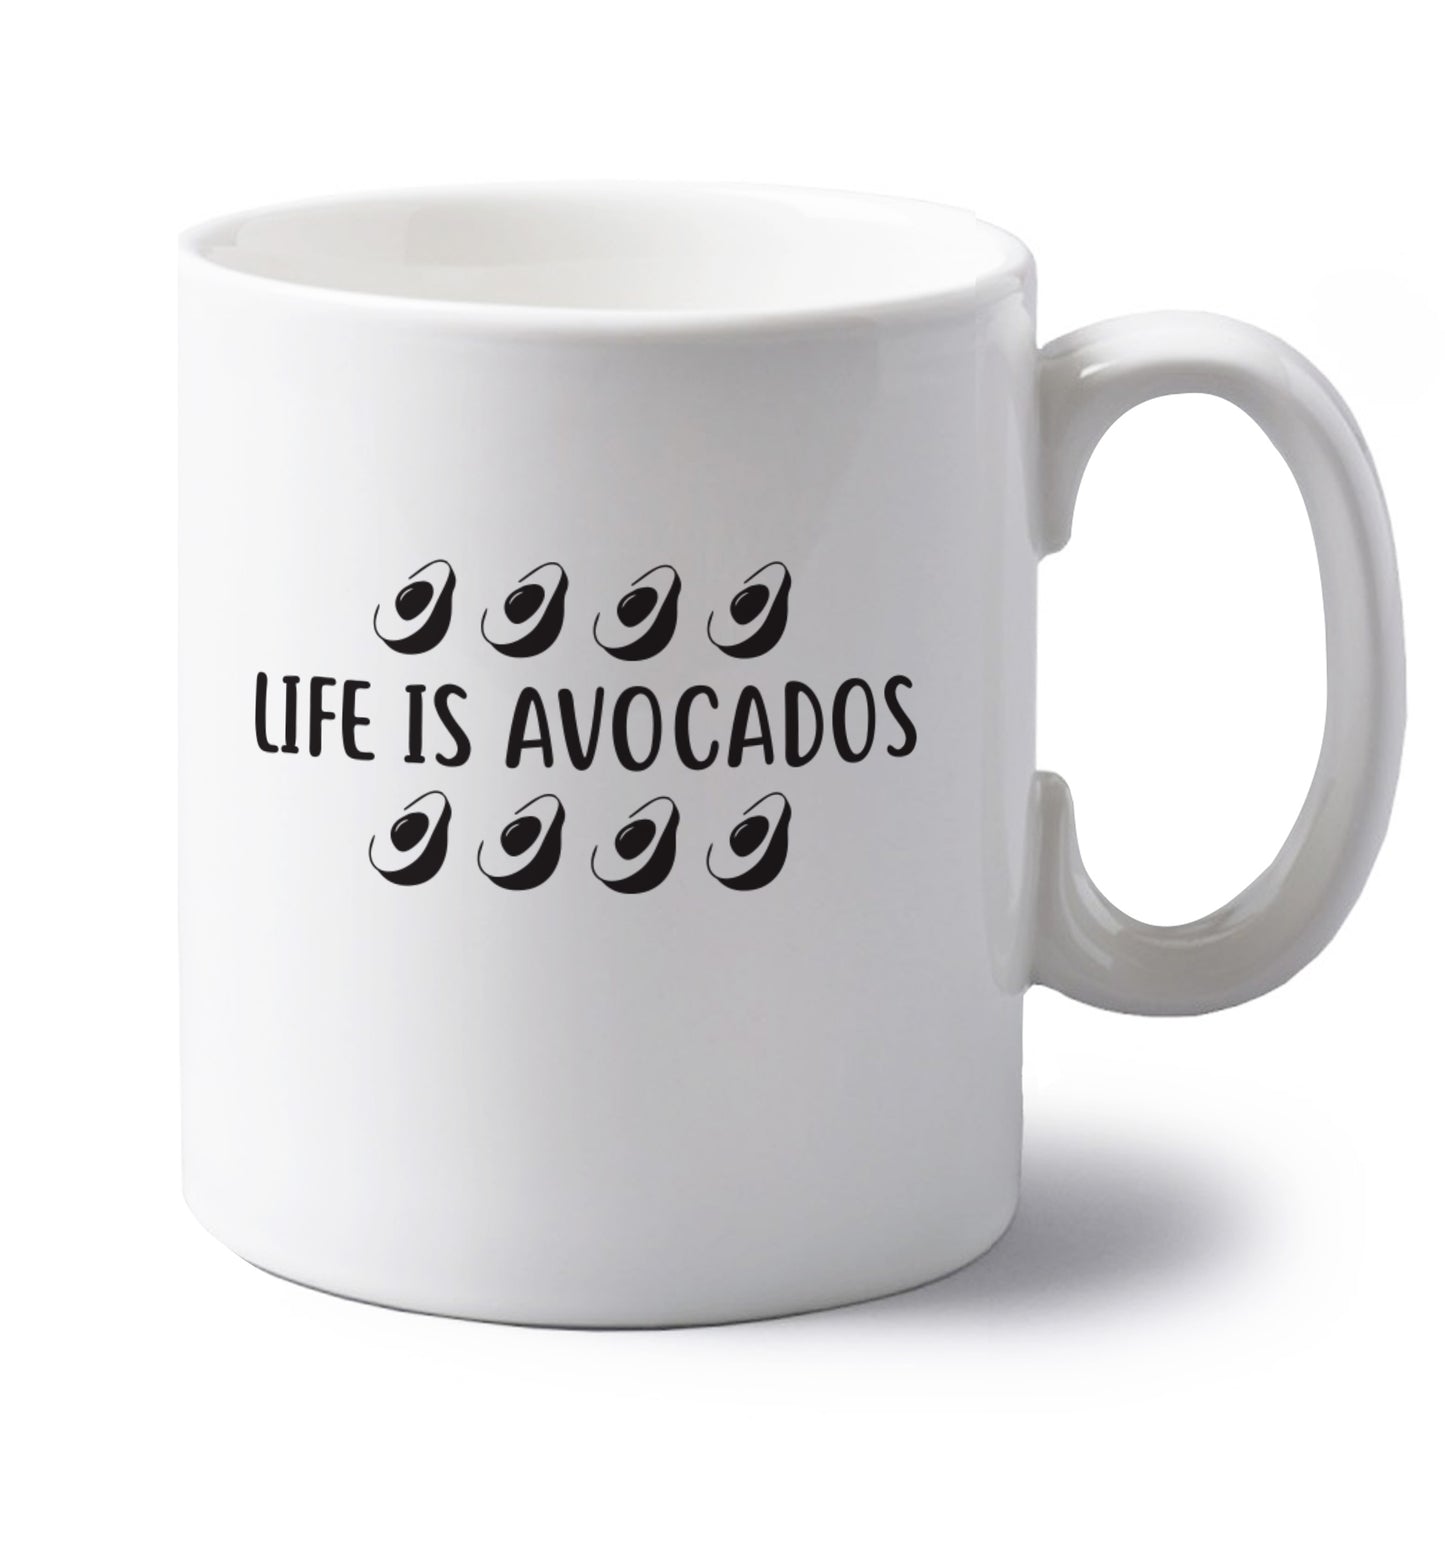 Life is avocados left handed white ceramic mug 